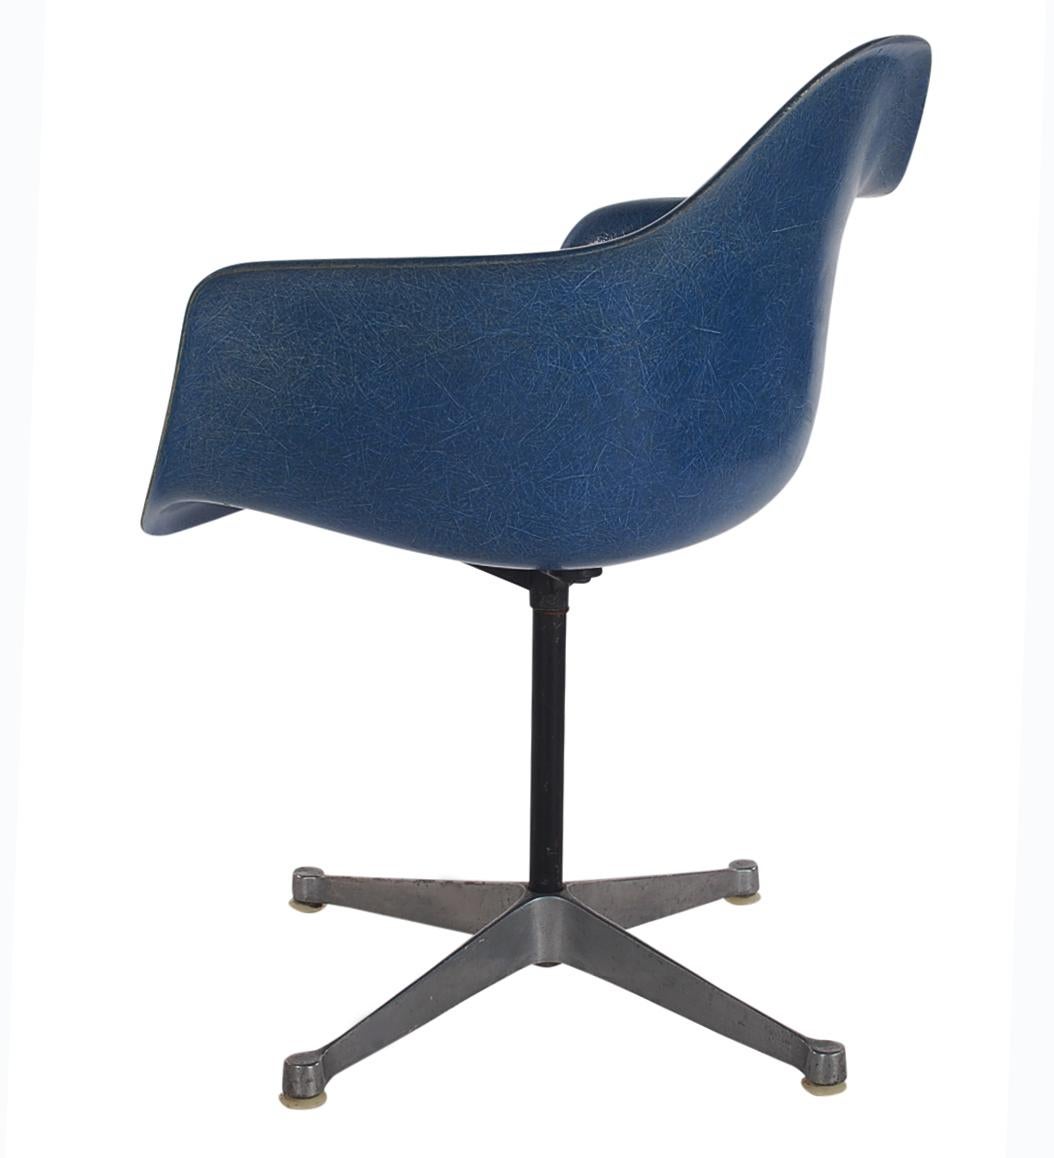 American Midcentury Charles Eames Herman Miller Fiberglass Dining Chairs in Royal Blue